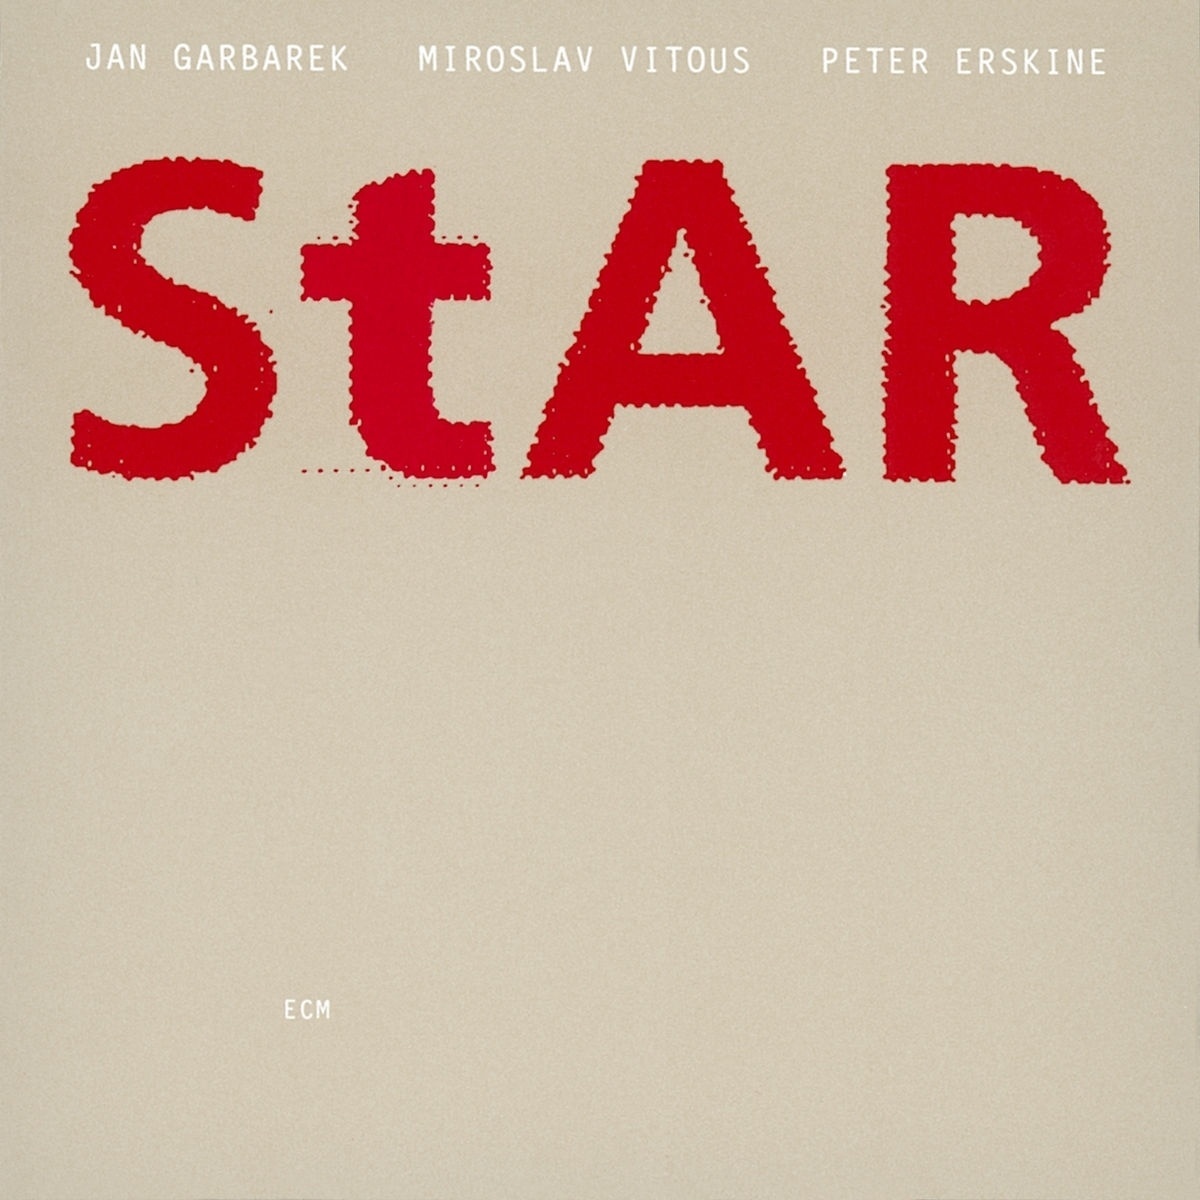 Star - Jan Garbarek. (CD)